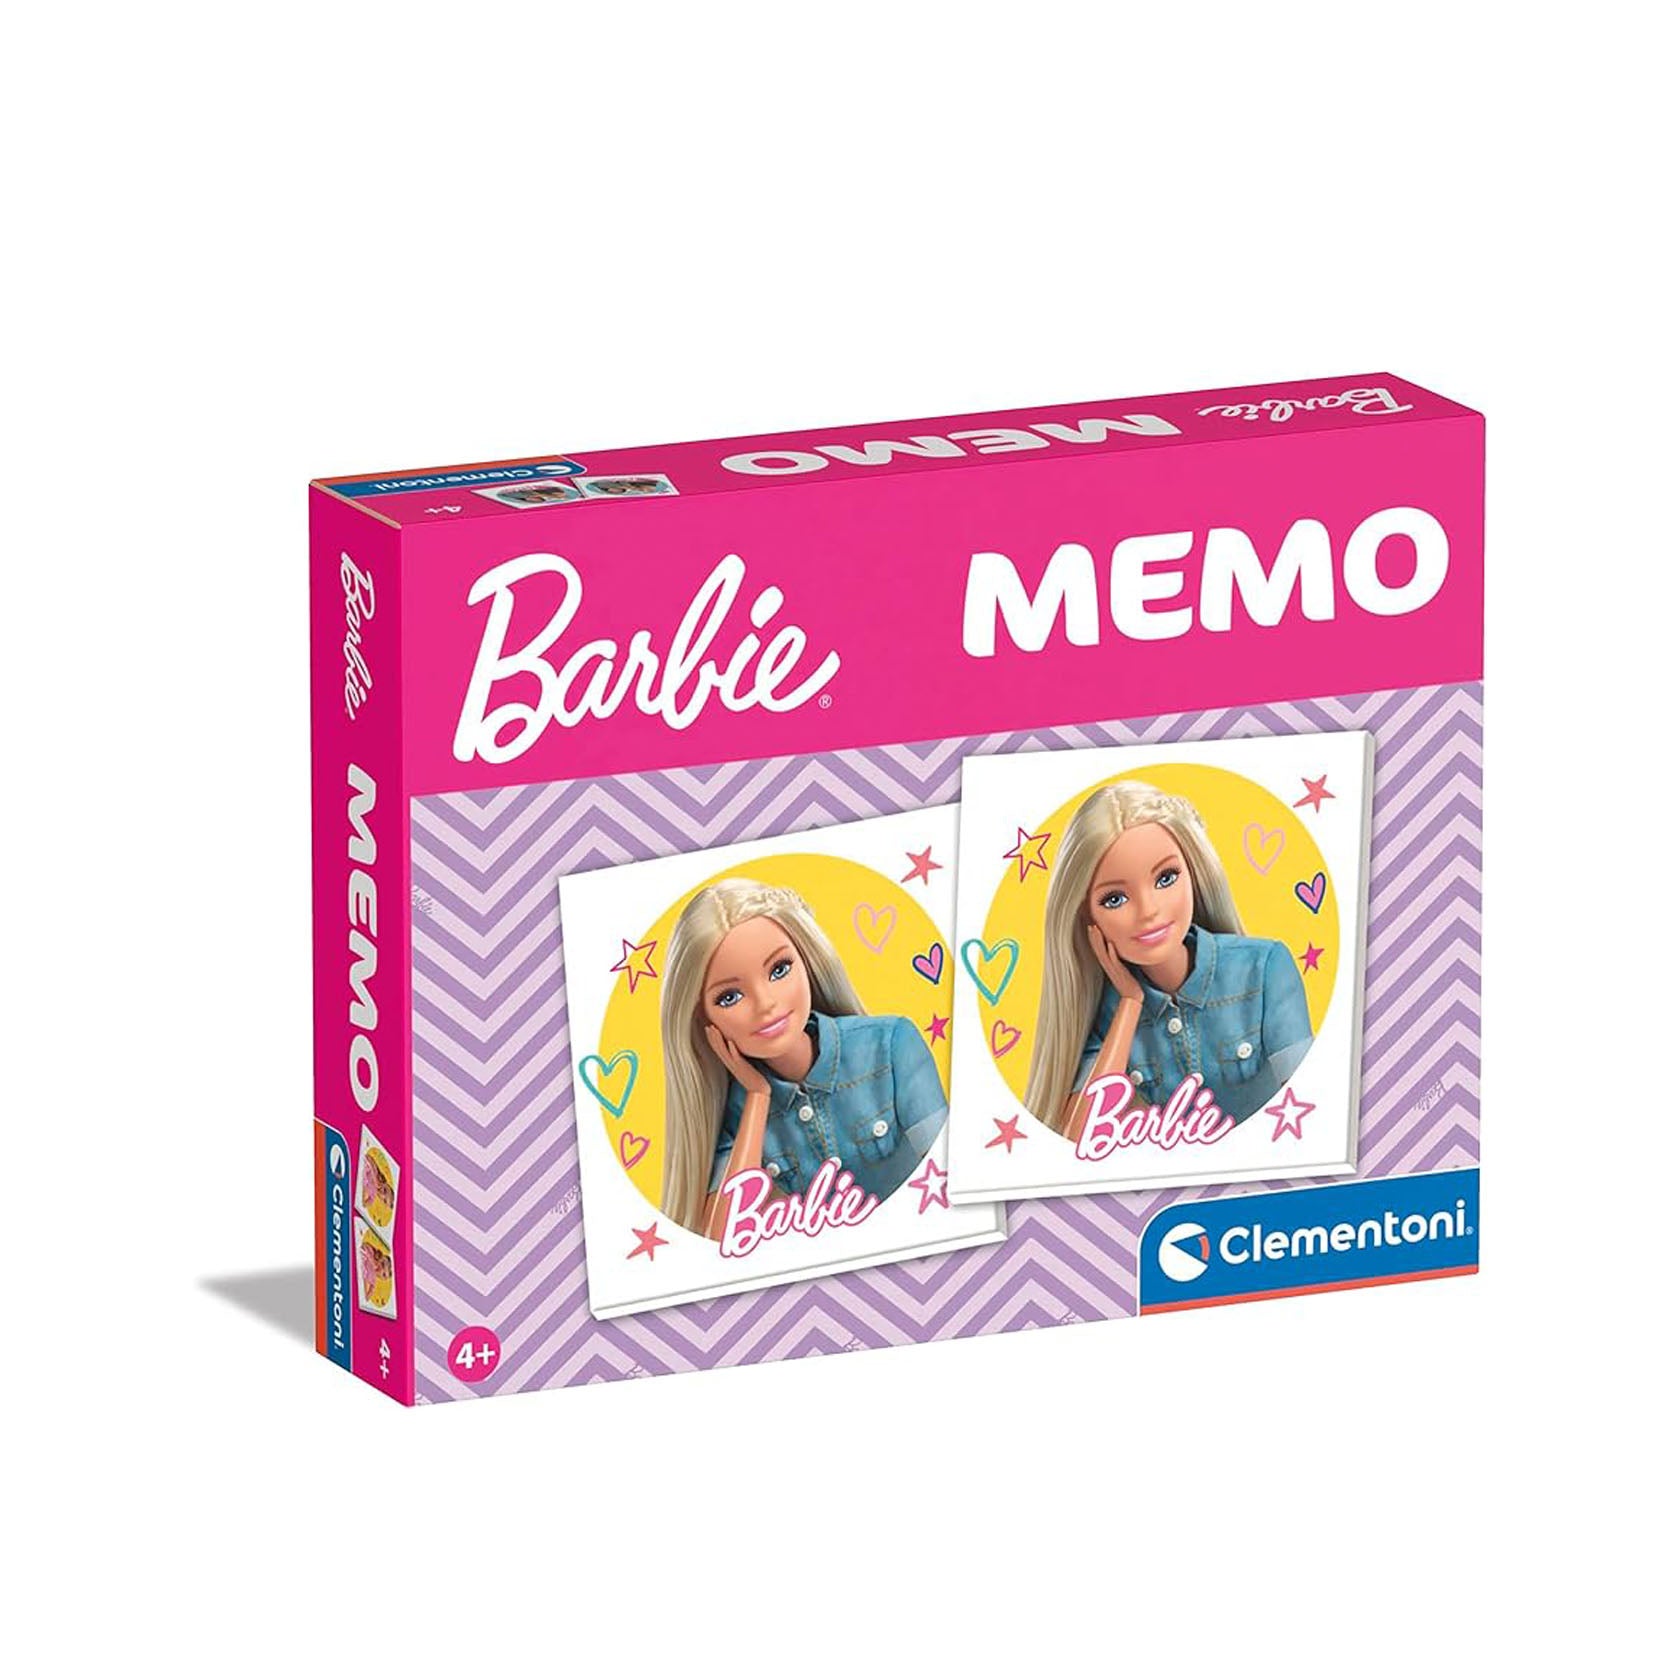 Clementoni Memo Pocket Barbie